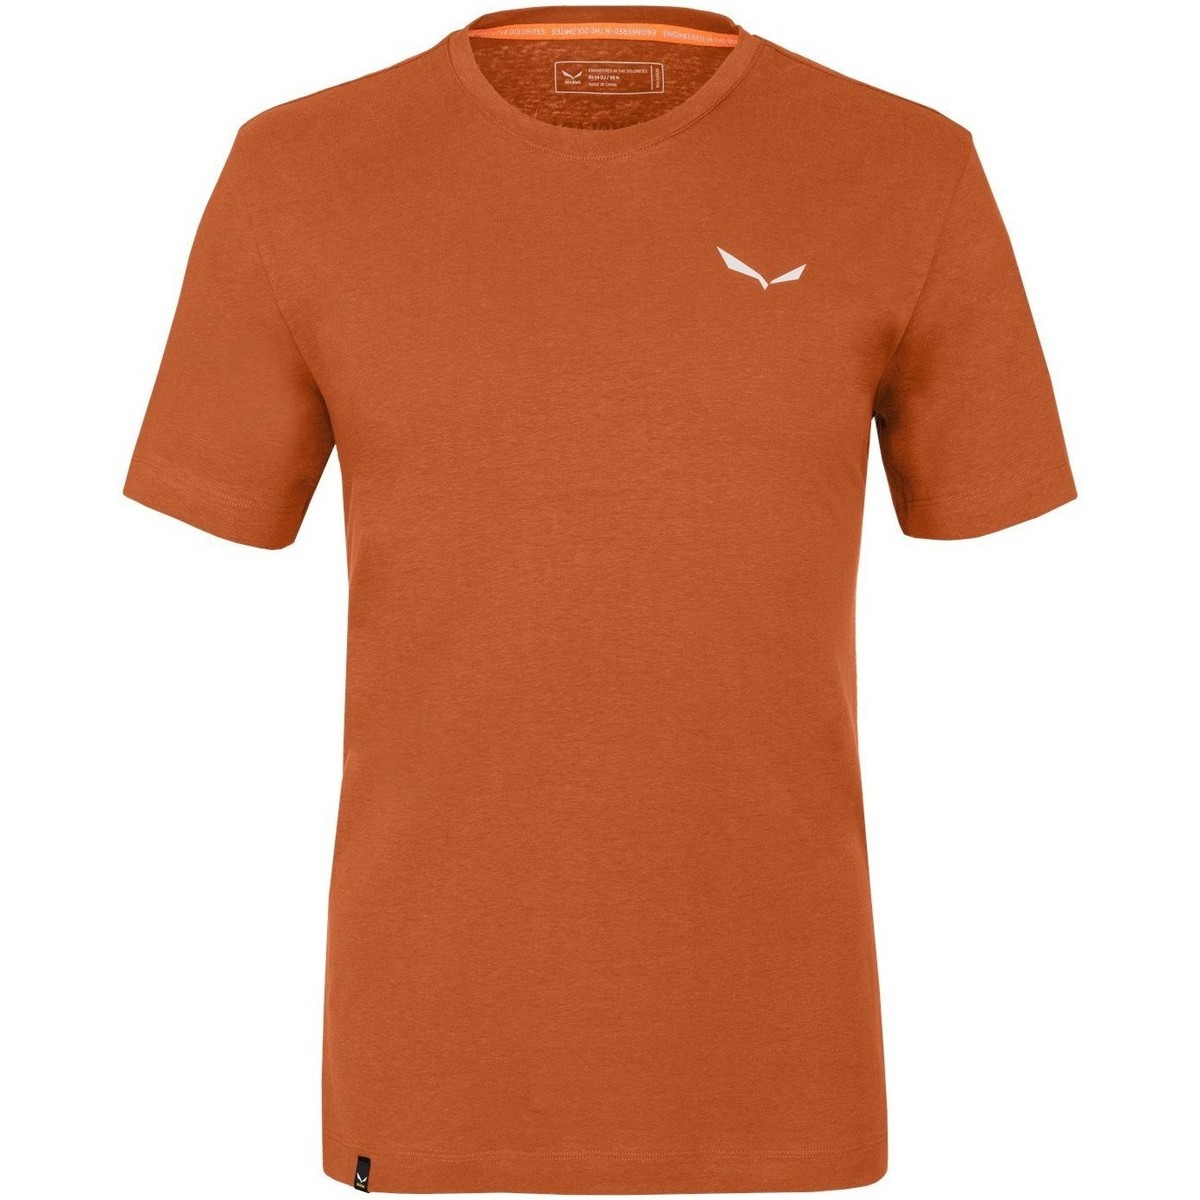 Vêtements Homme office-accessories footwear-accessories lighters mats clothing wallets Salewa Pure Dolomites Hemp Men's T-Shirt 28329-4170 Orange